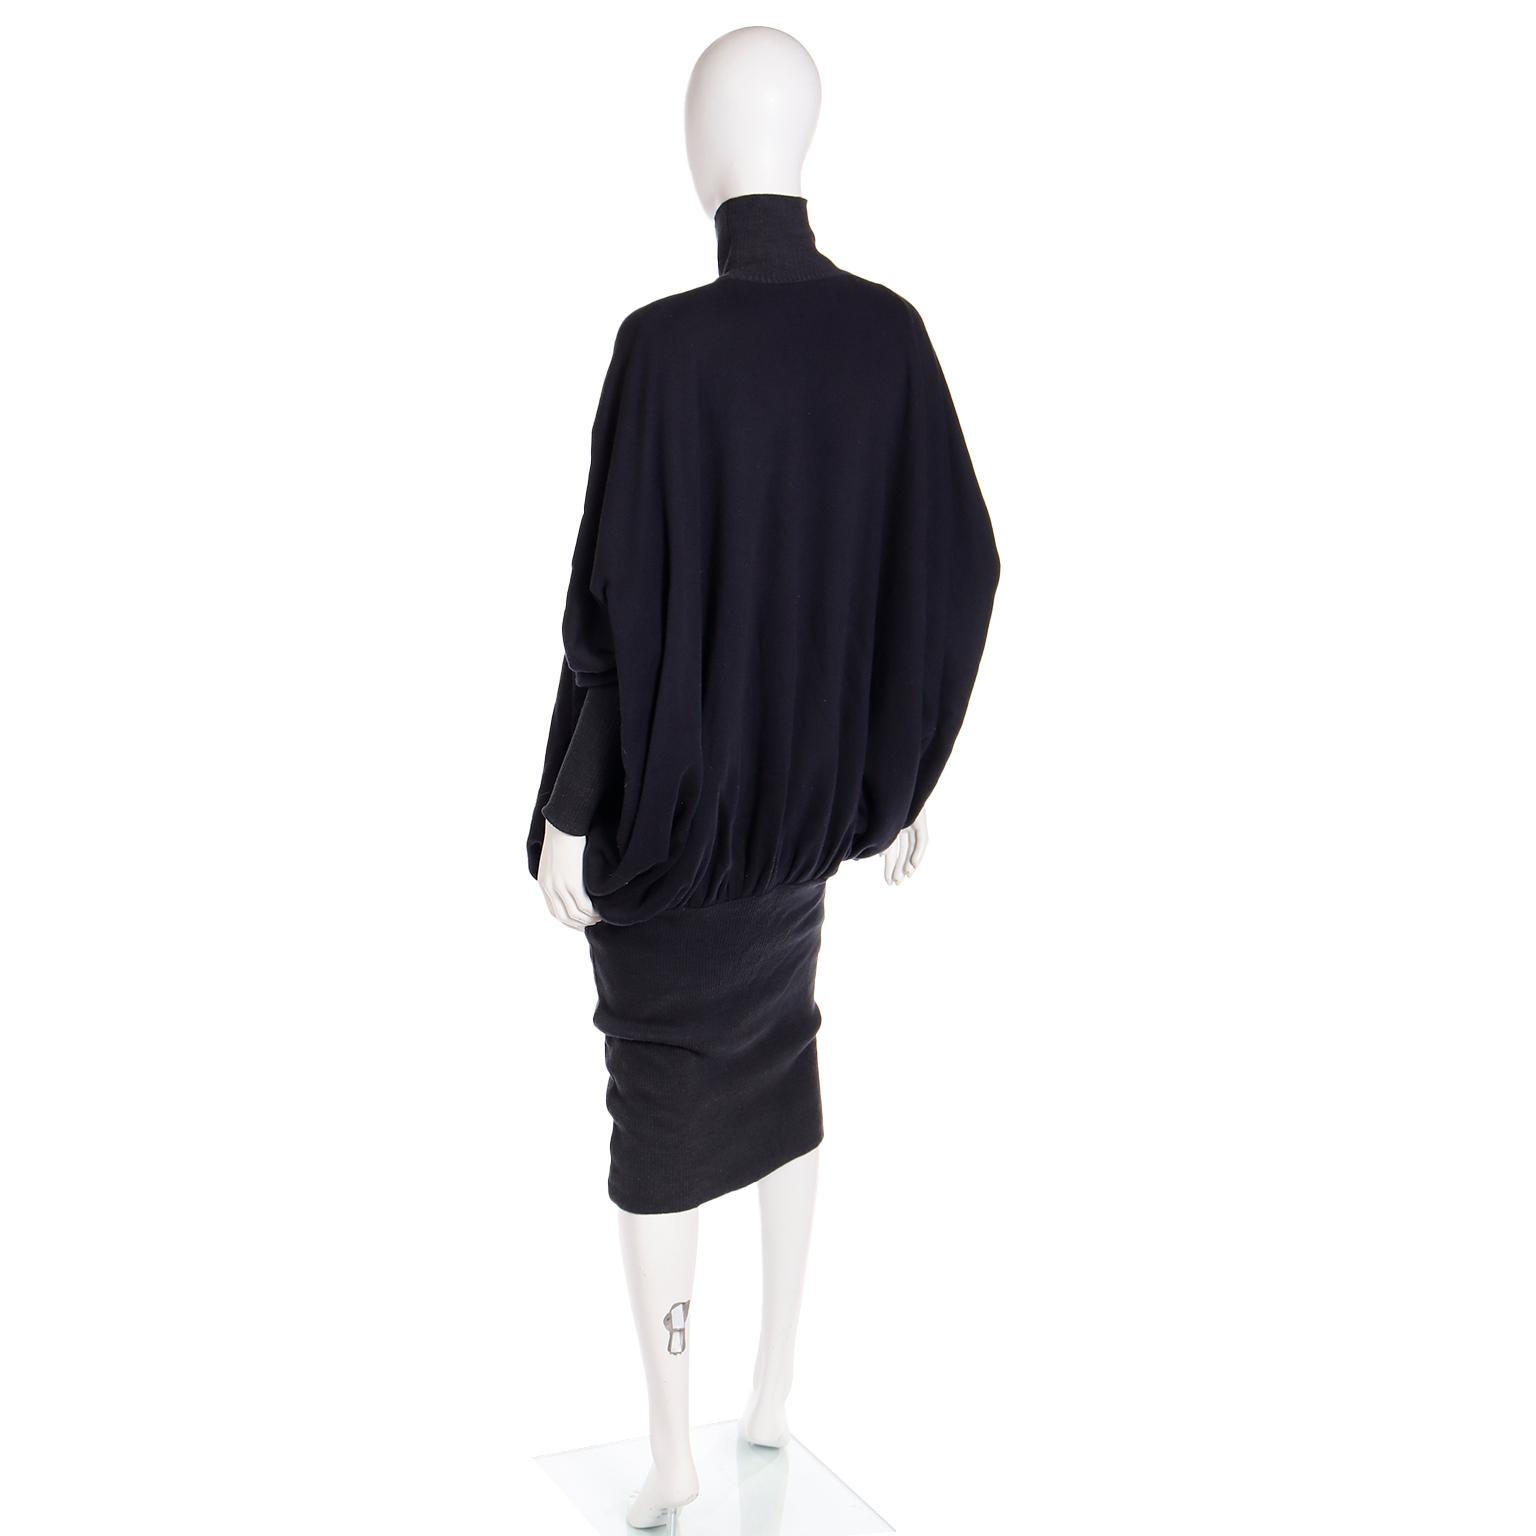 Women's Norma Kamali 1985 Vintage Sweatshirt Material Dress in the MET